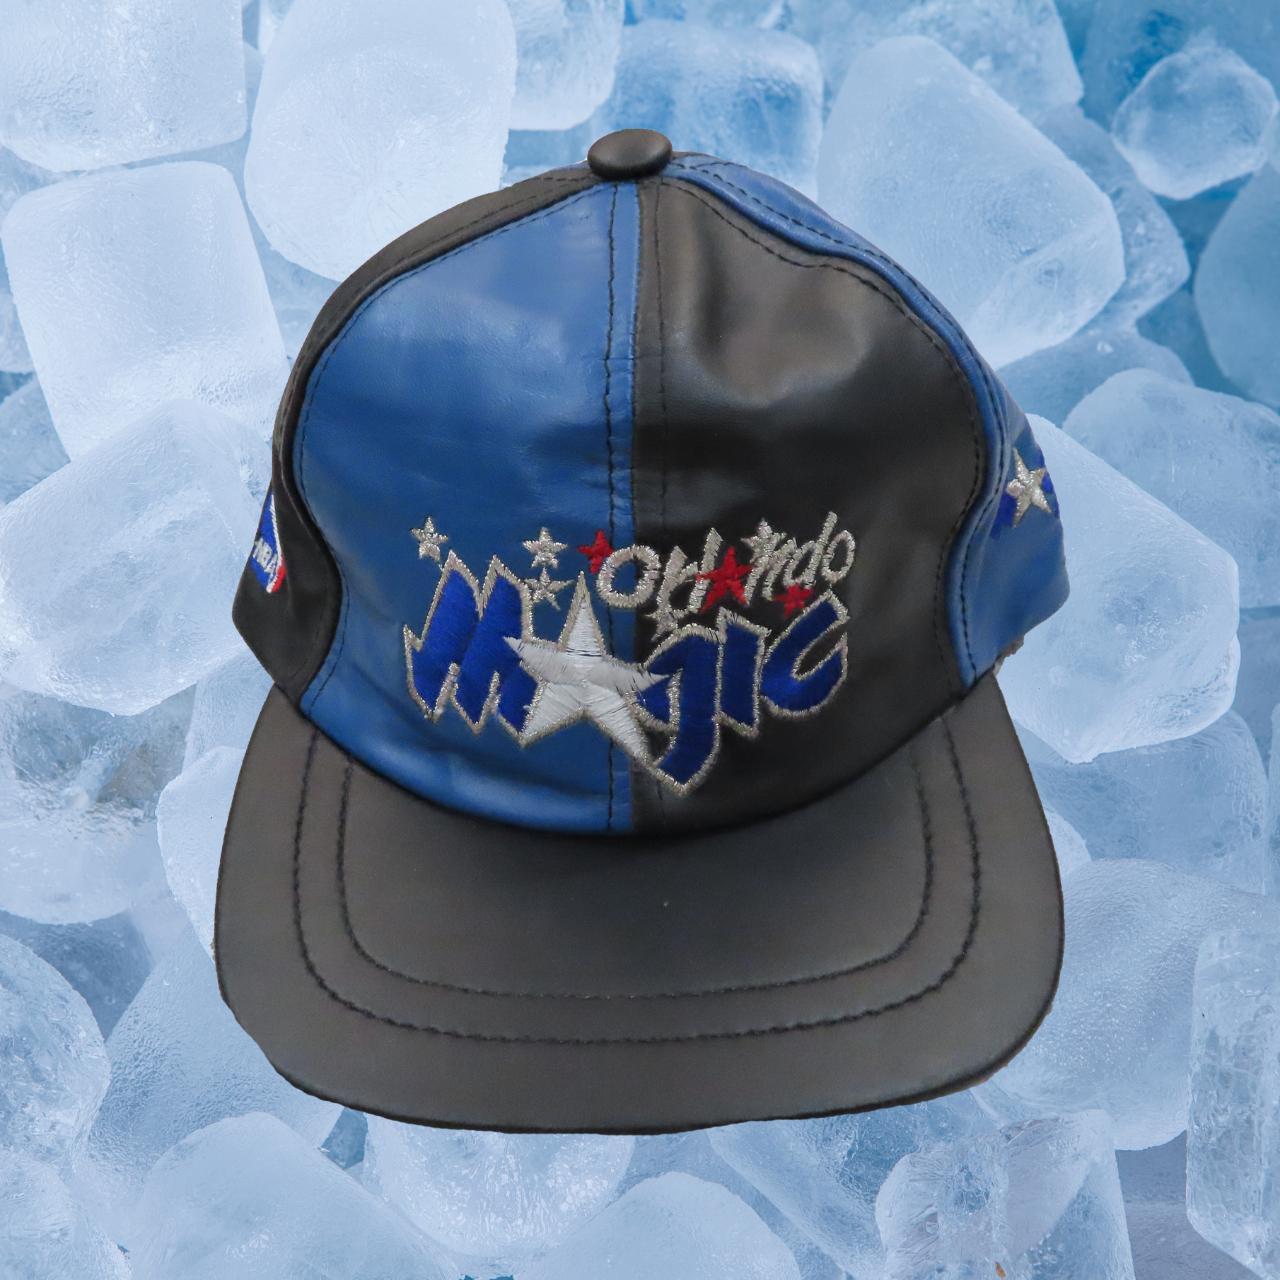 Vintage 90s Orlando Magic Big Logo Snapback Hat by the Game